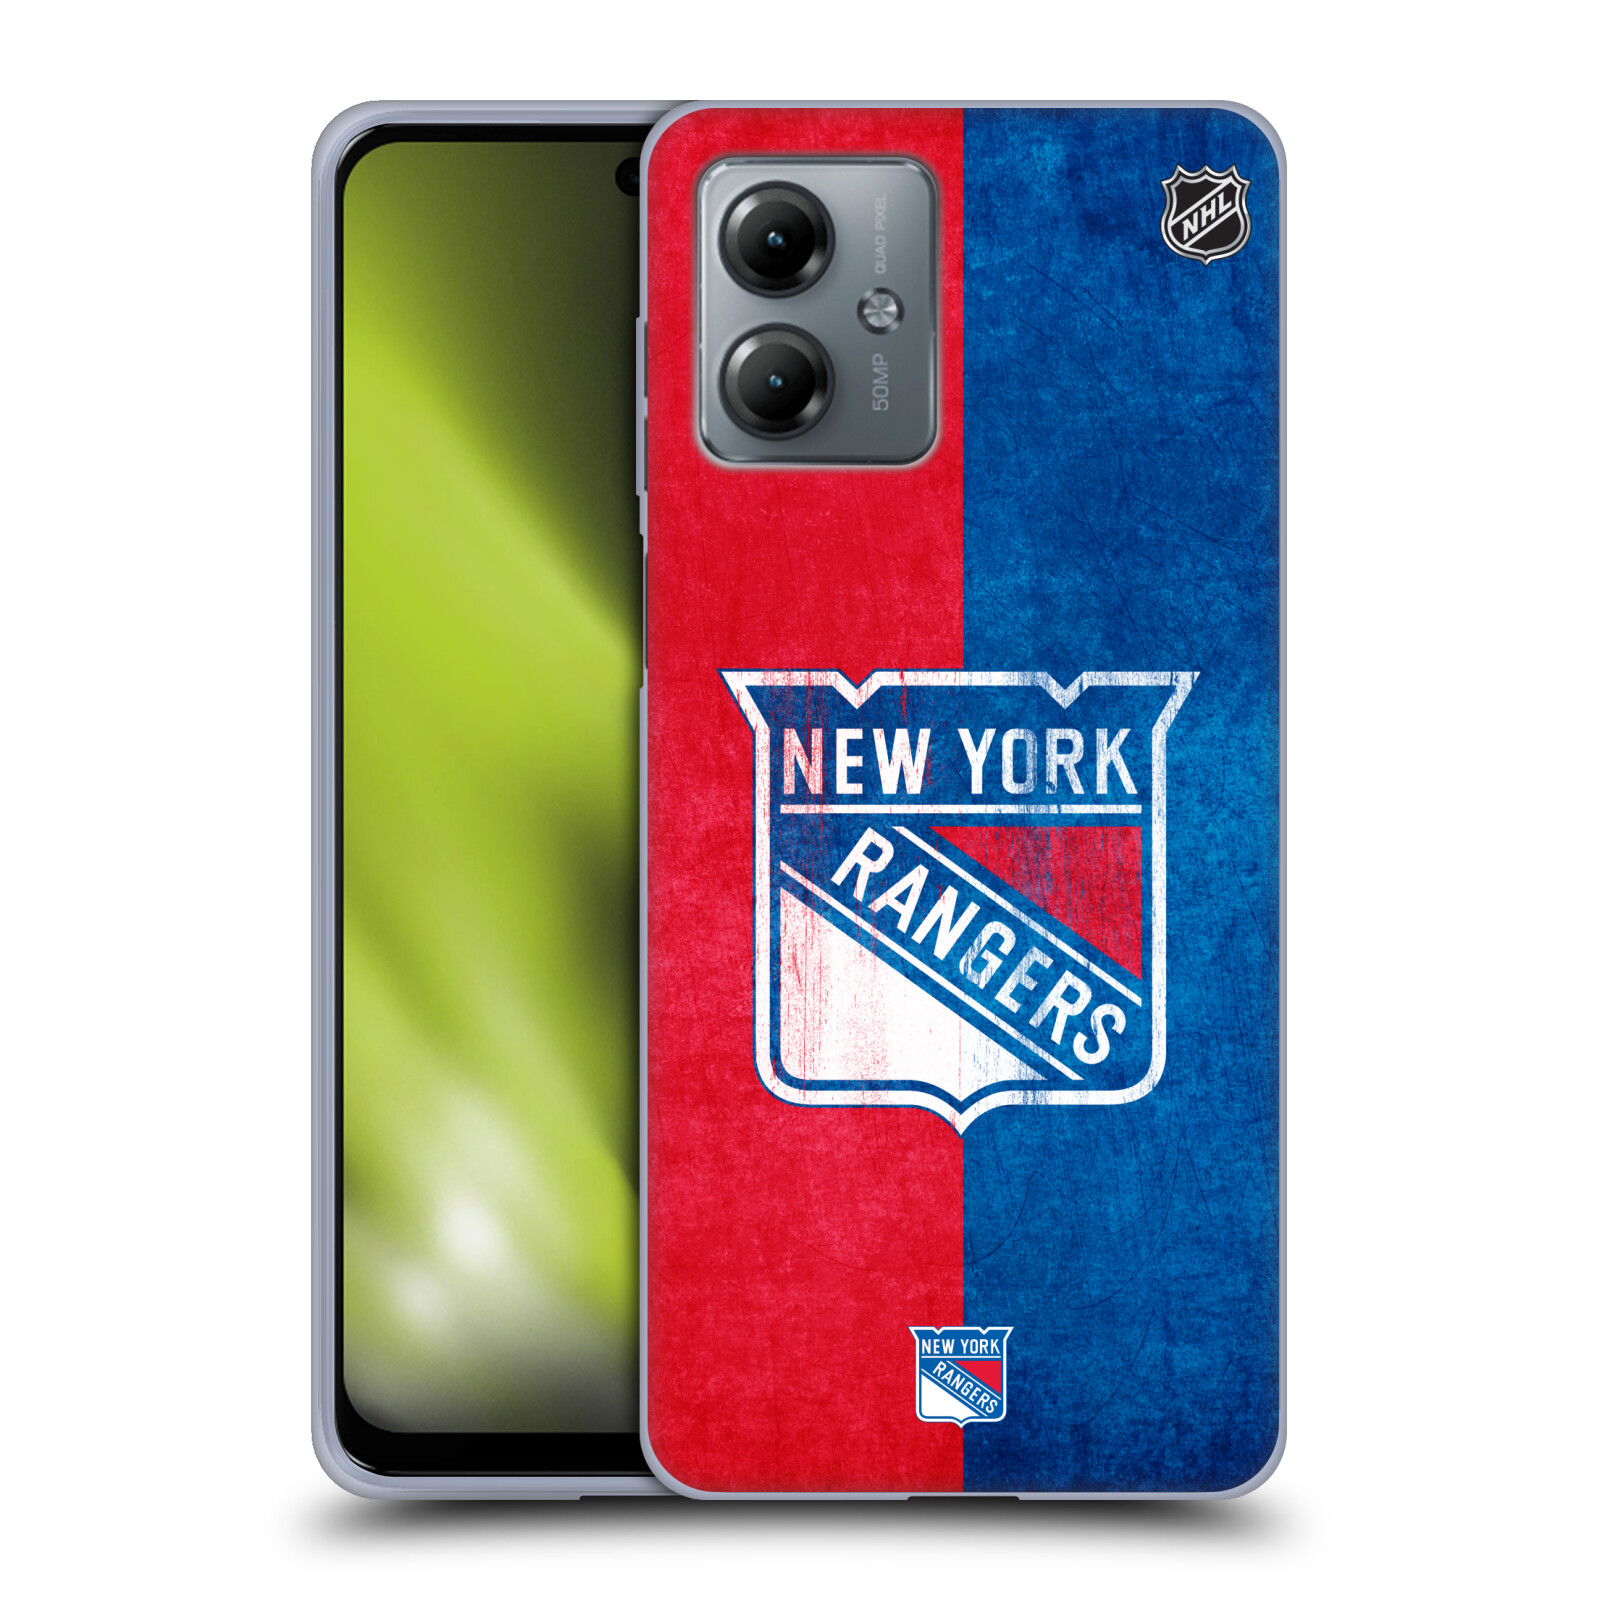 Silikonové pouzdro na mobil Motorola Moto G14 - NHL - Půlené logo New York Rangers (Silikonový kryt, obal, pouzdro na mobilní telefon Motorola Moto G14 s licencovaným motivem NHL - Půlené logo New York Rangers)